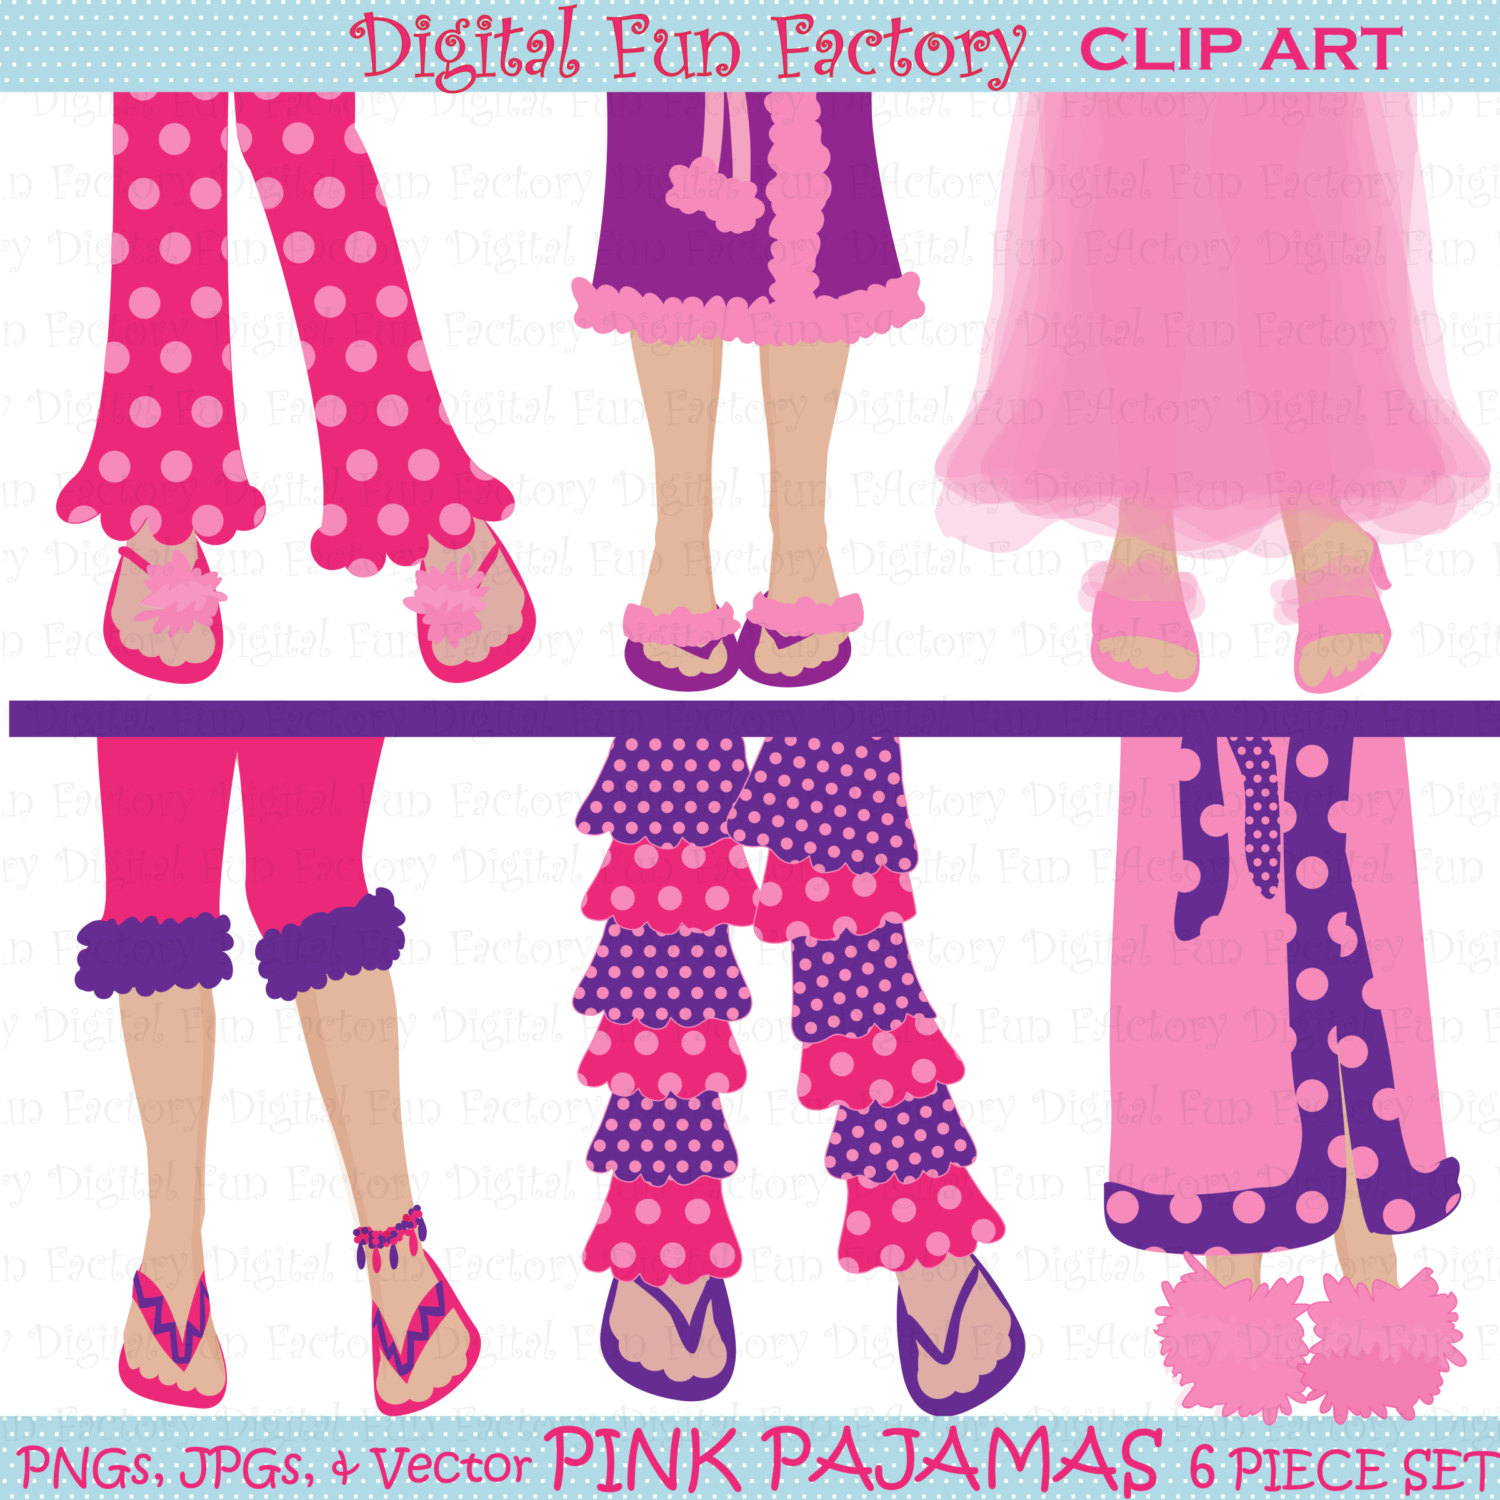 Piece Pink Pajama Legs Shoe Clip Art Set Cute Clipart Sports Graphic